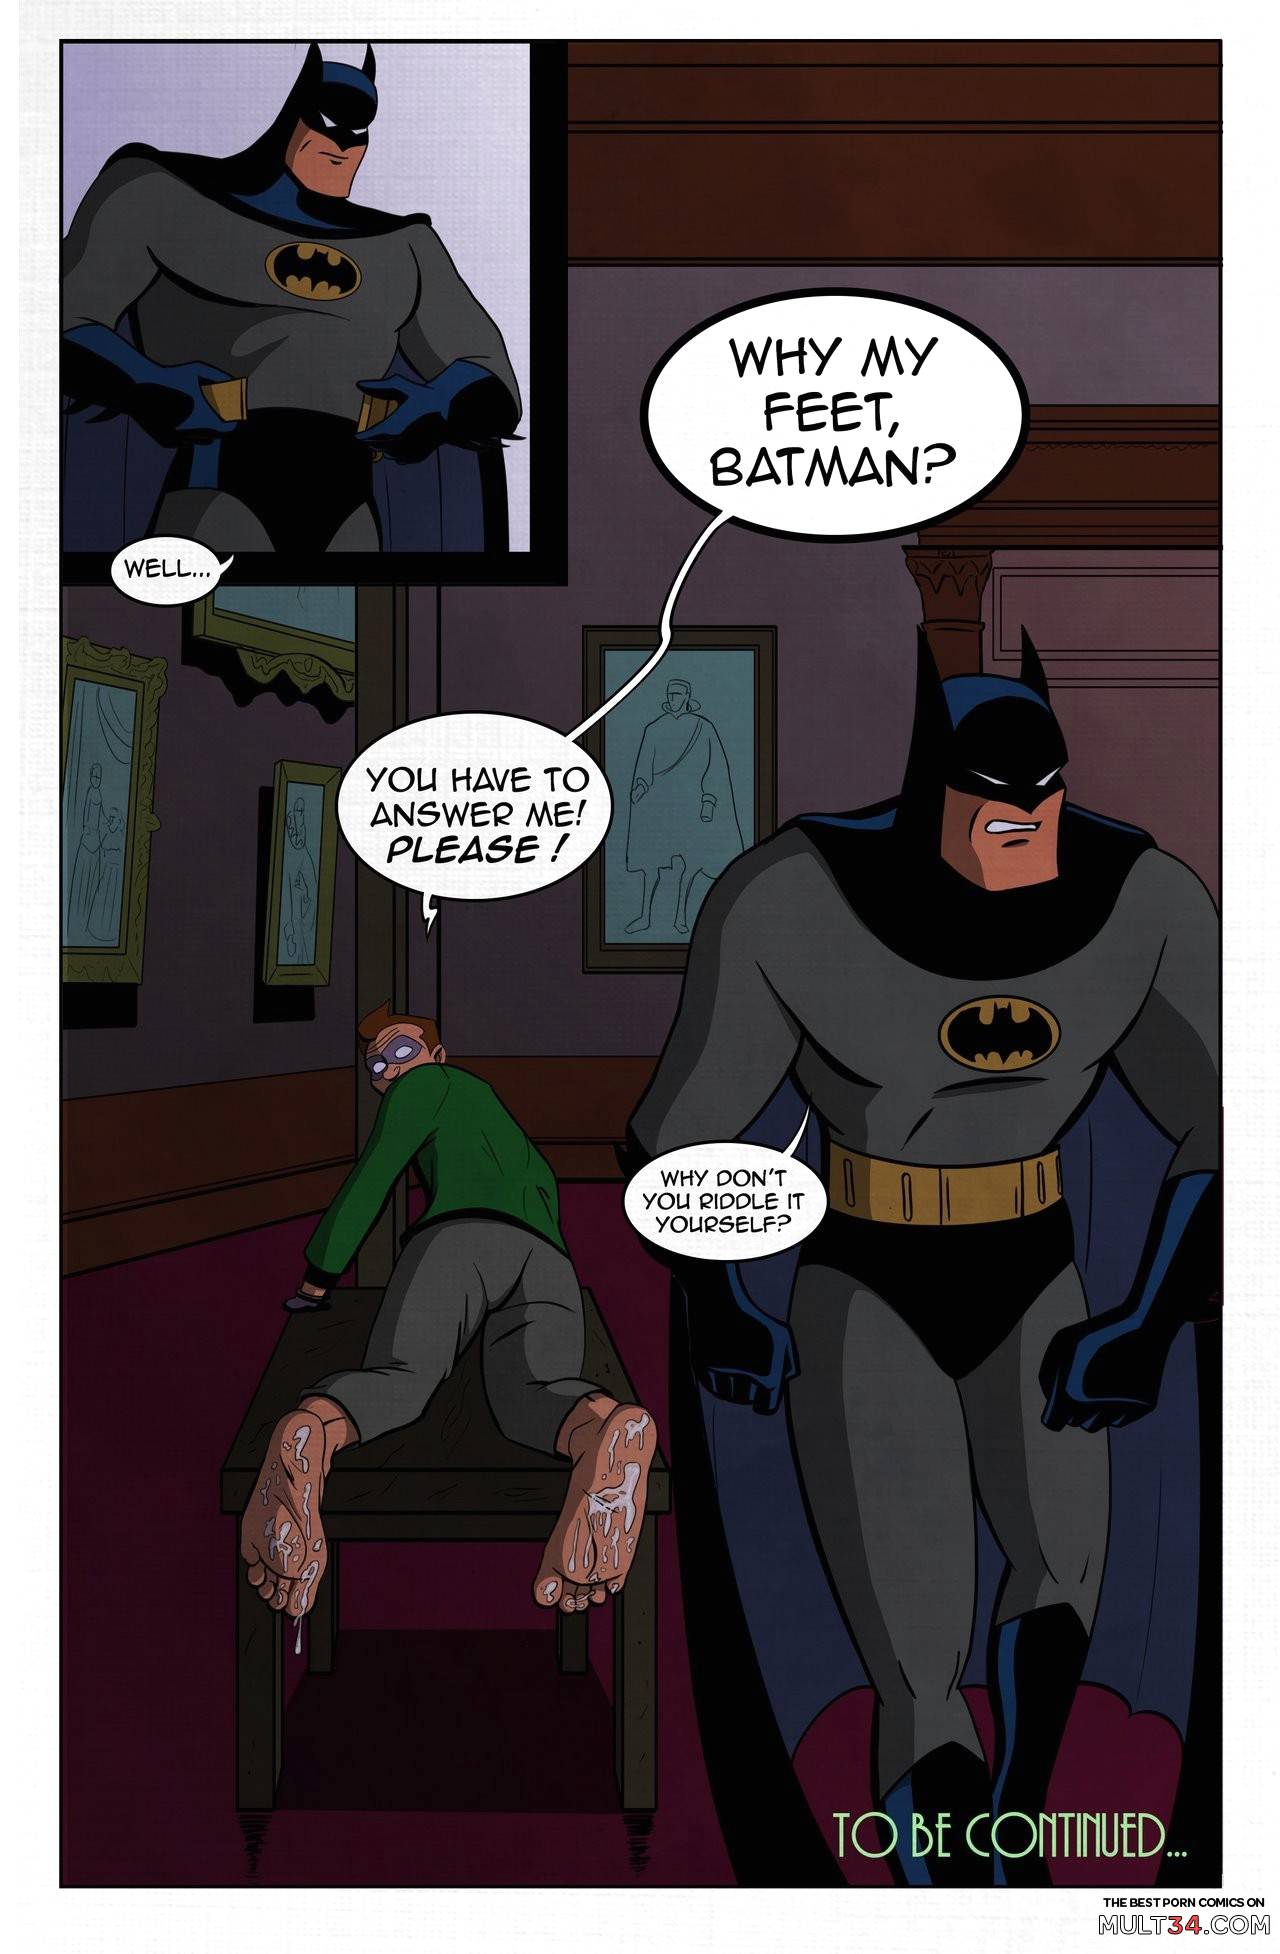 1280px x 1954px - Batman - The Foot Soldier gay porn comic - the best cartoon porn comics,  Rule 34 | MULT34